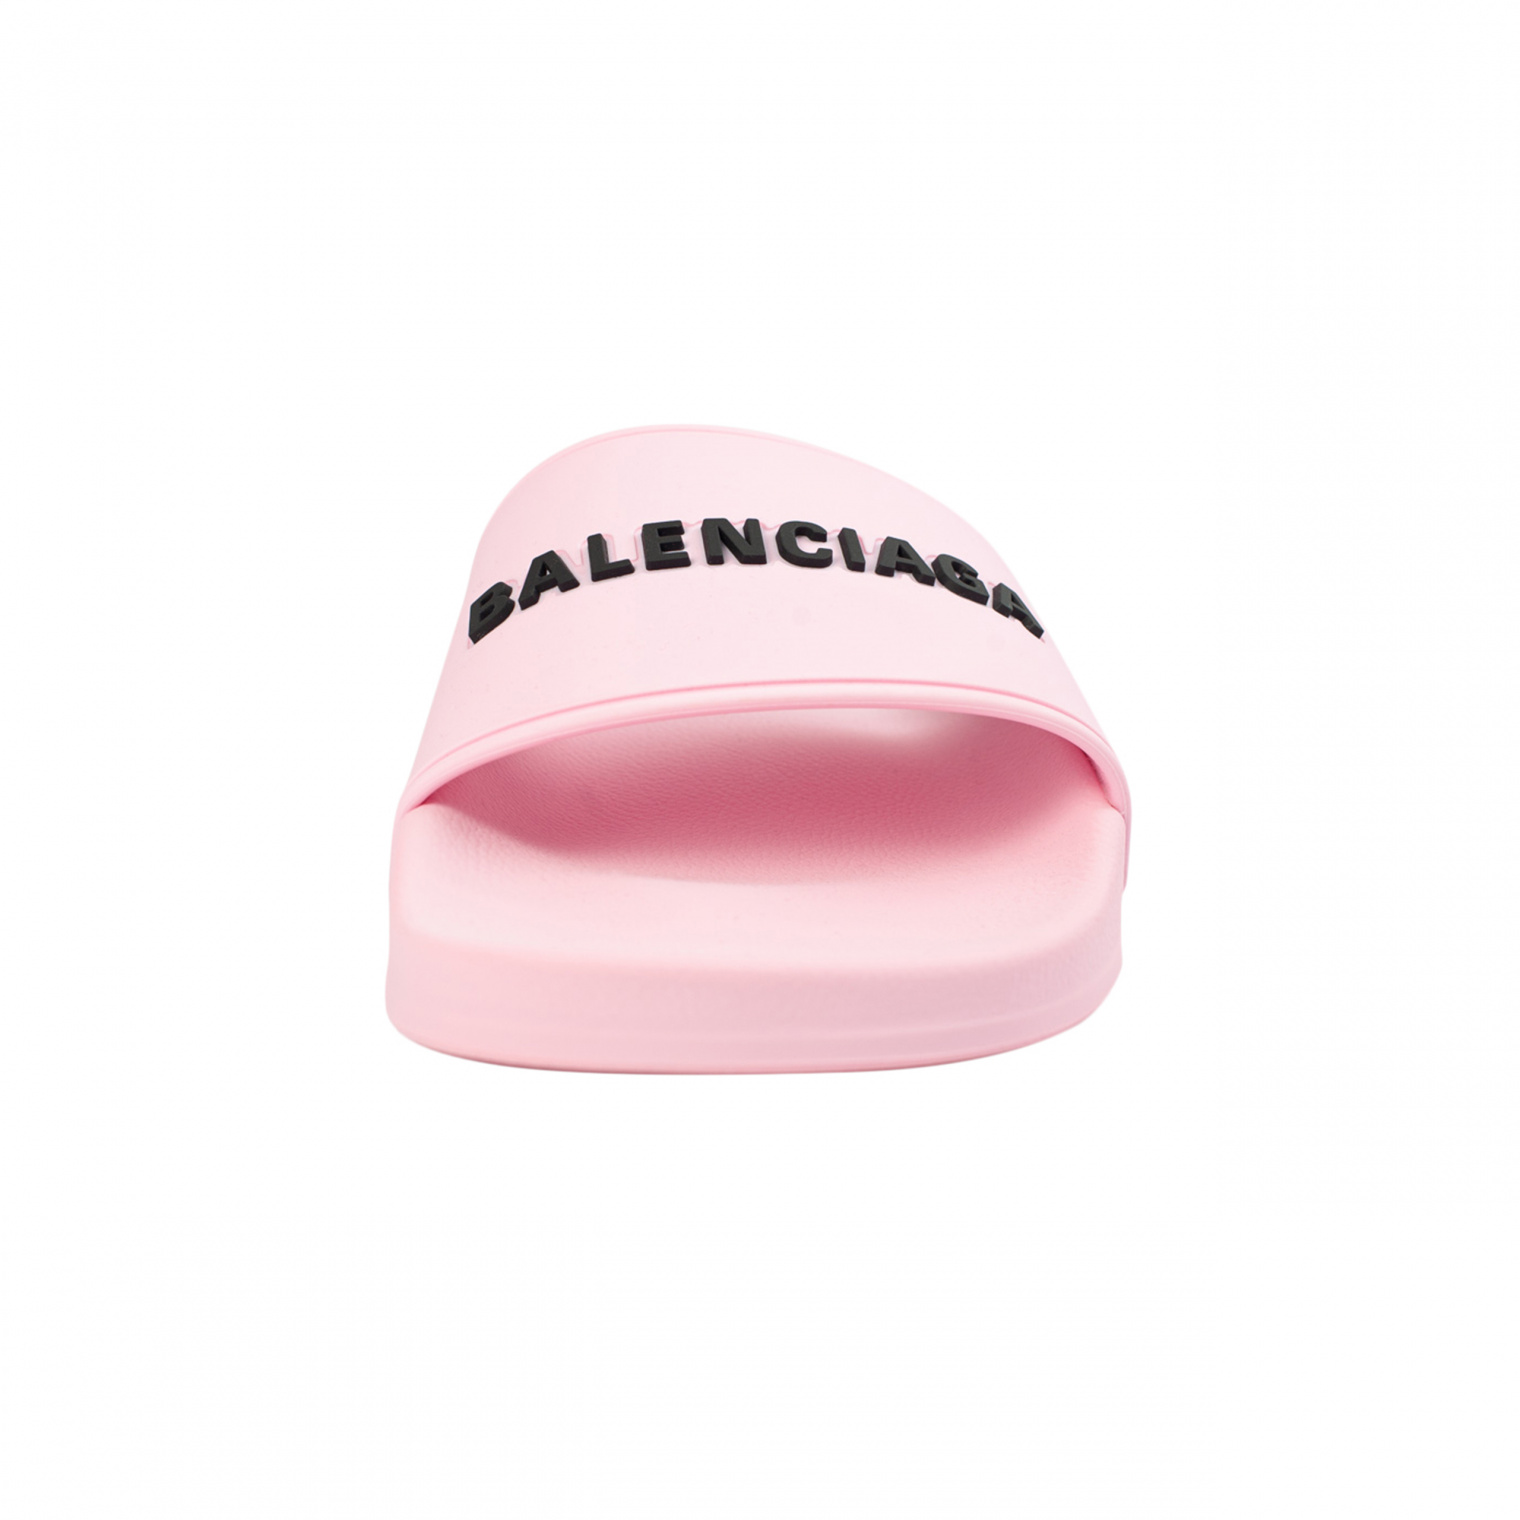 Balenciaga Pool Slippers in Pink